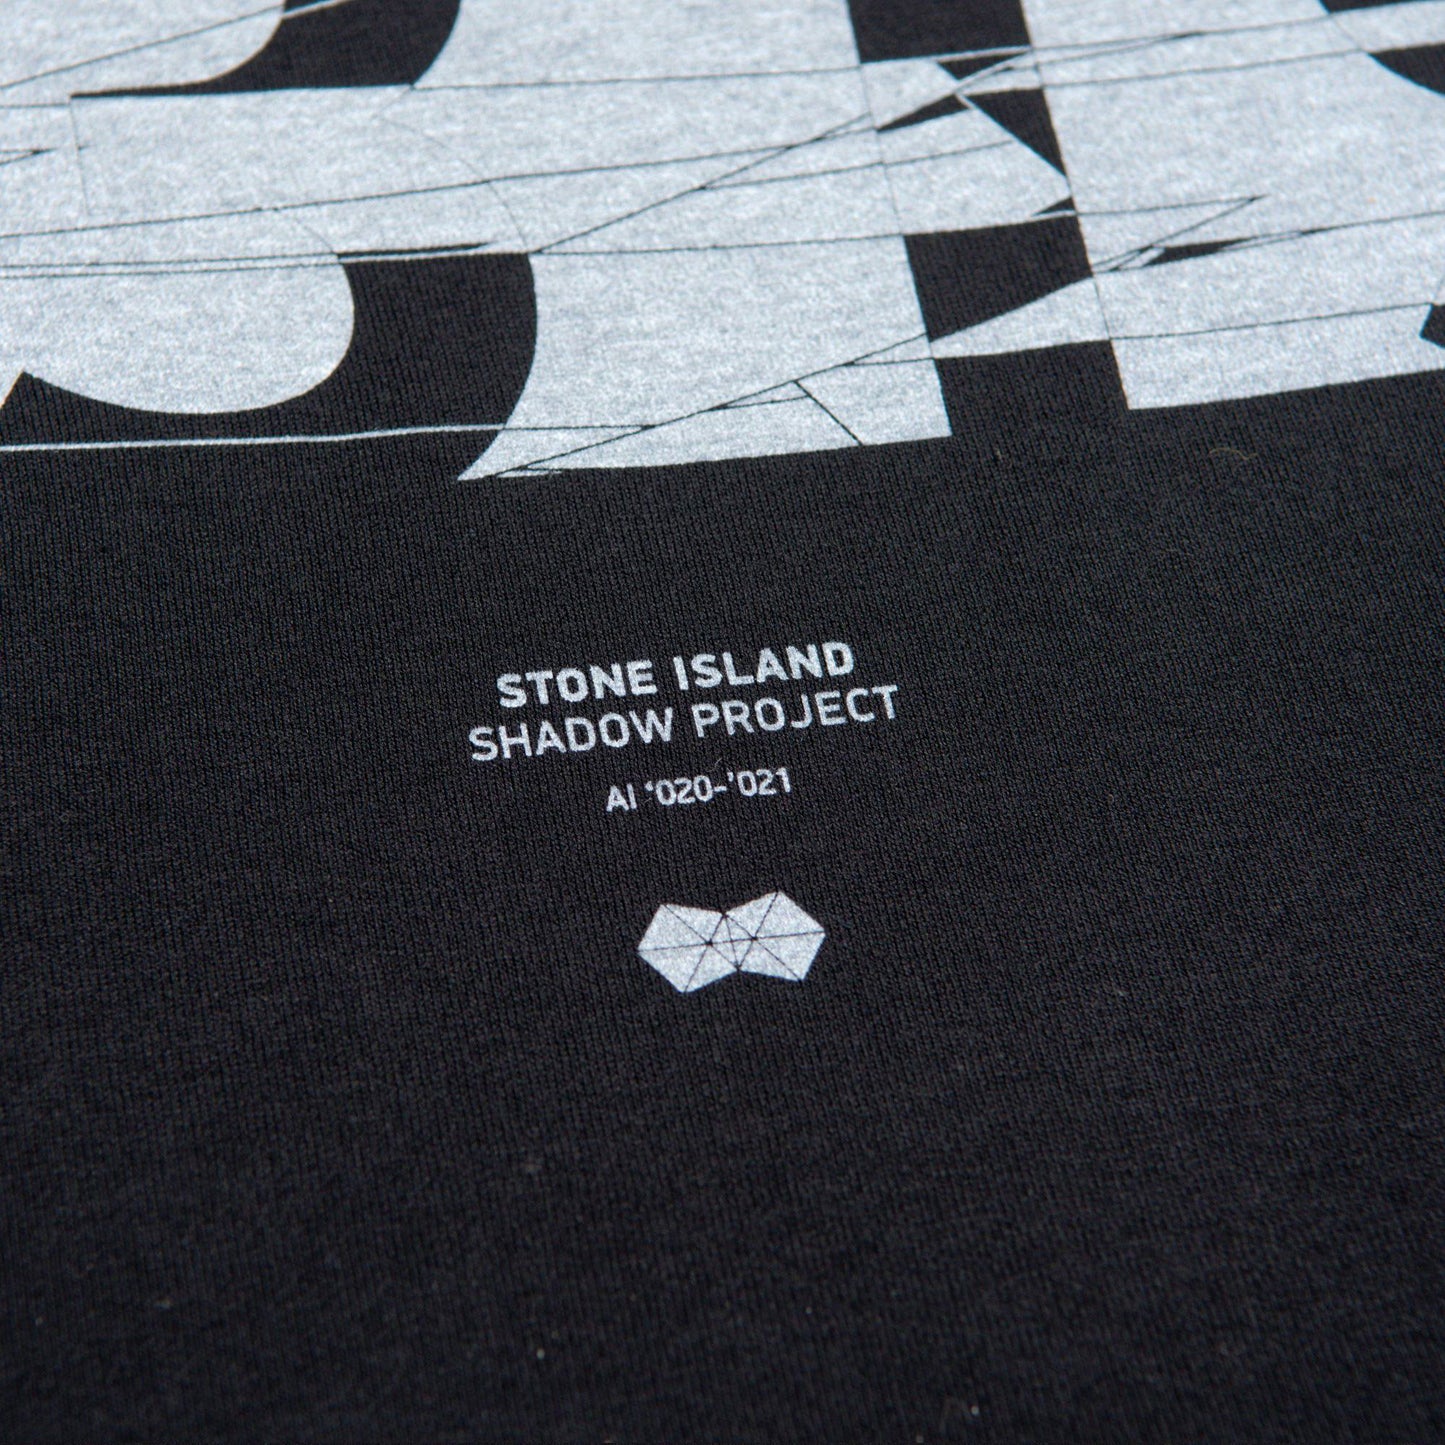 Stone Island Shadow Project 7319 Back Print T-Shirt T-Shirt Stone Island 